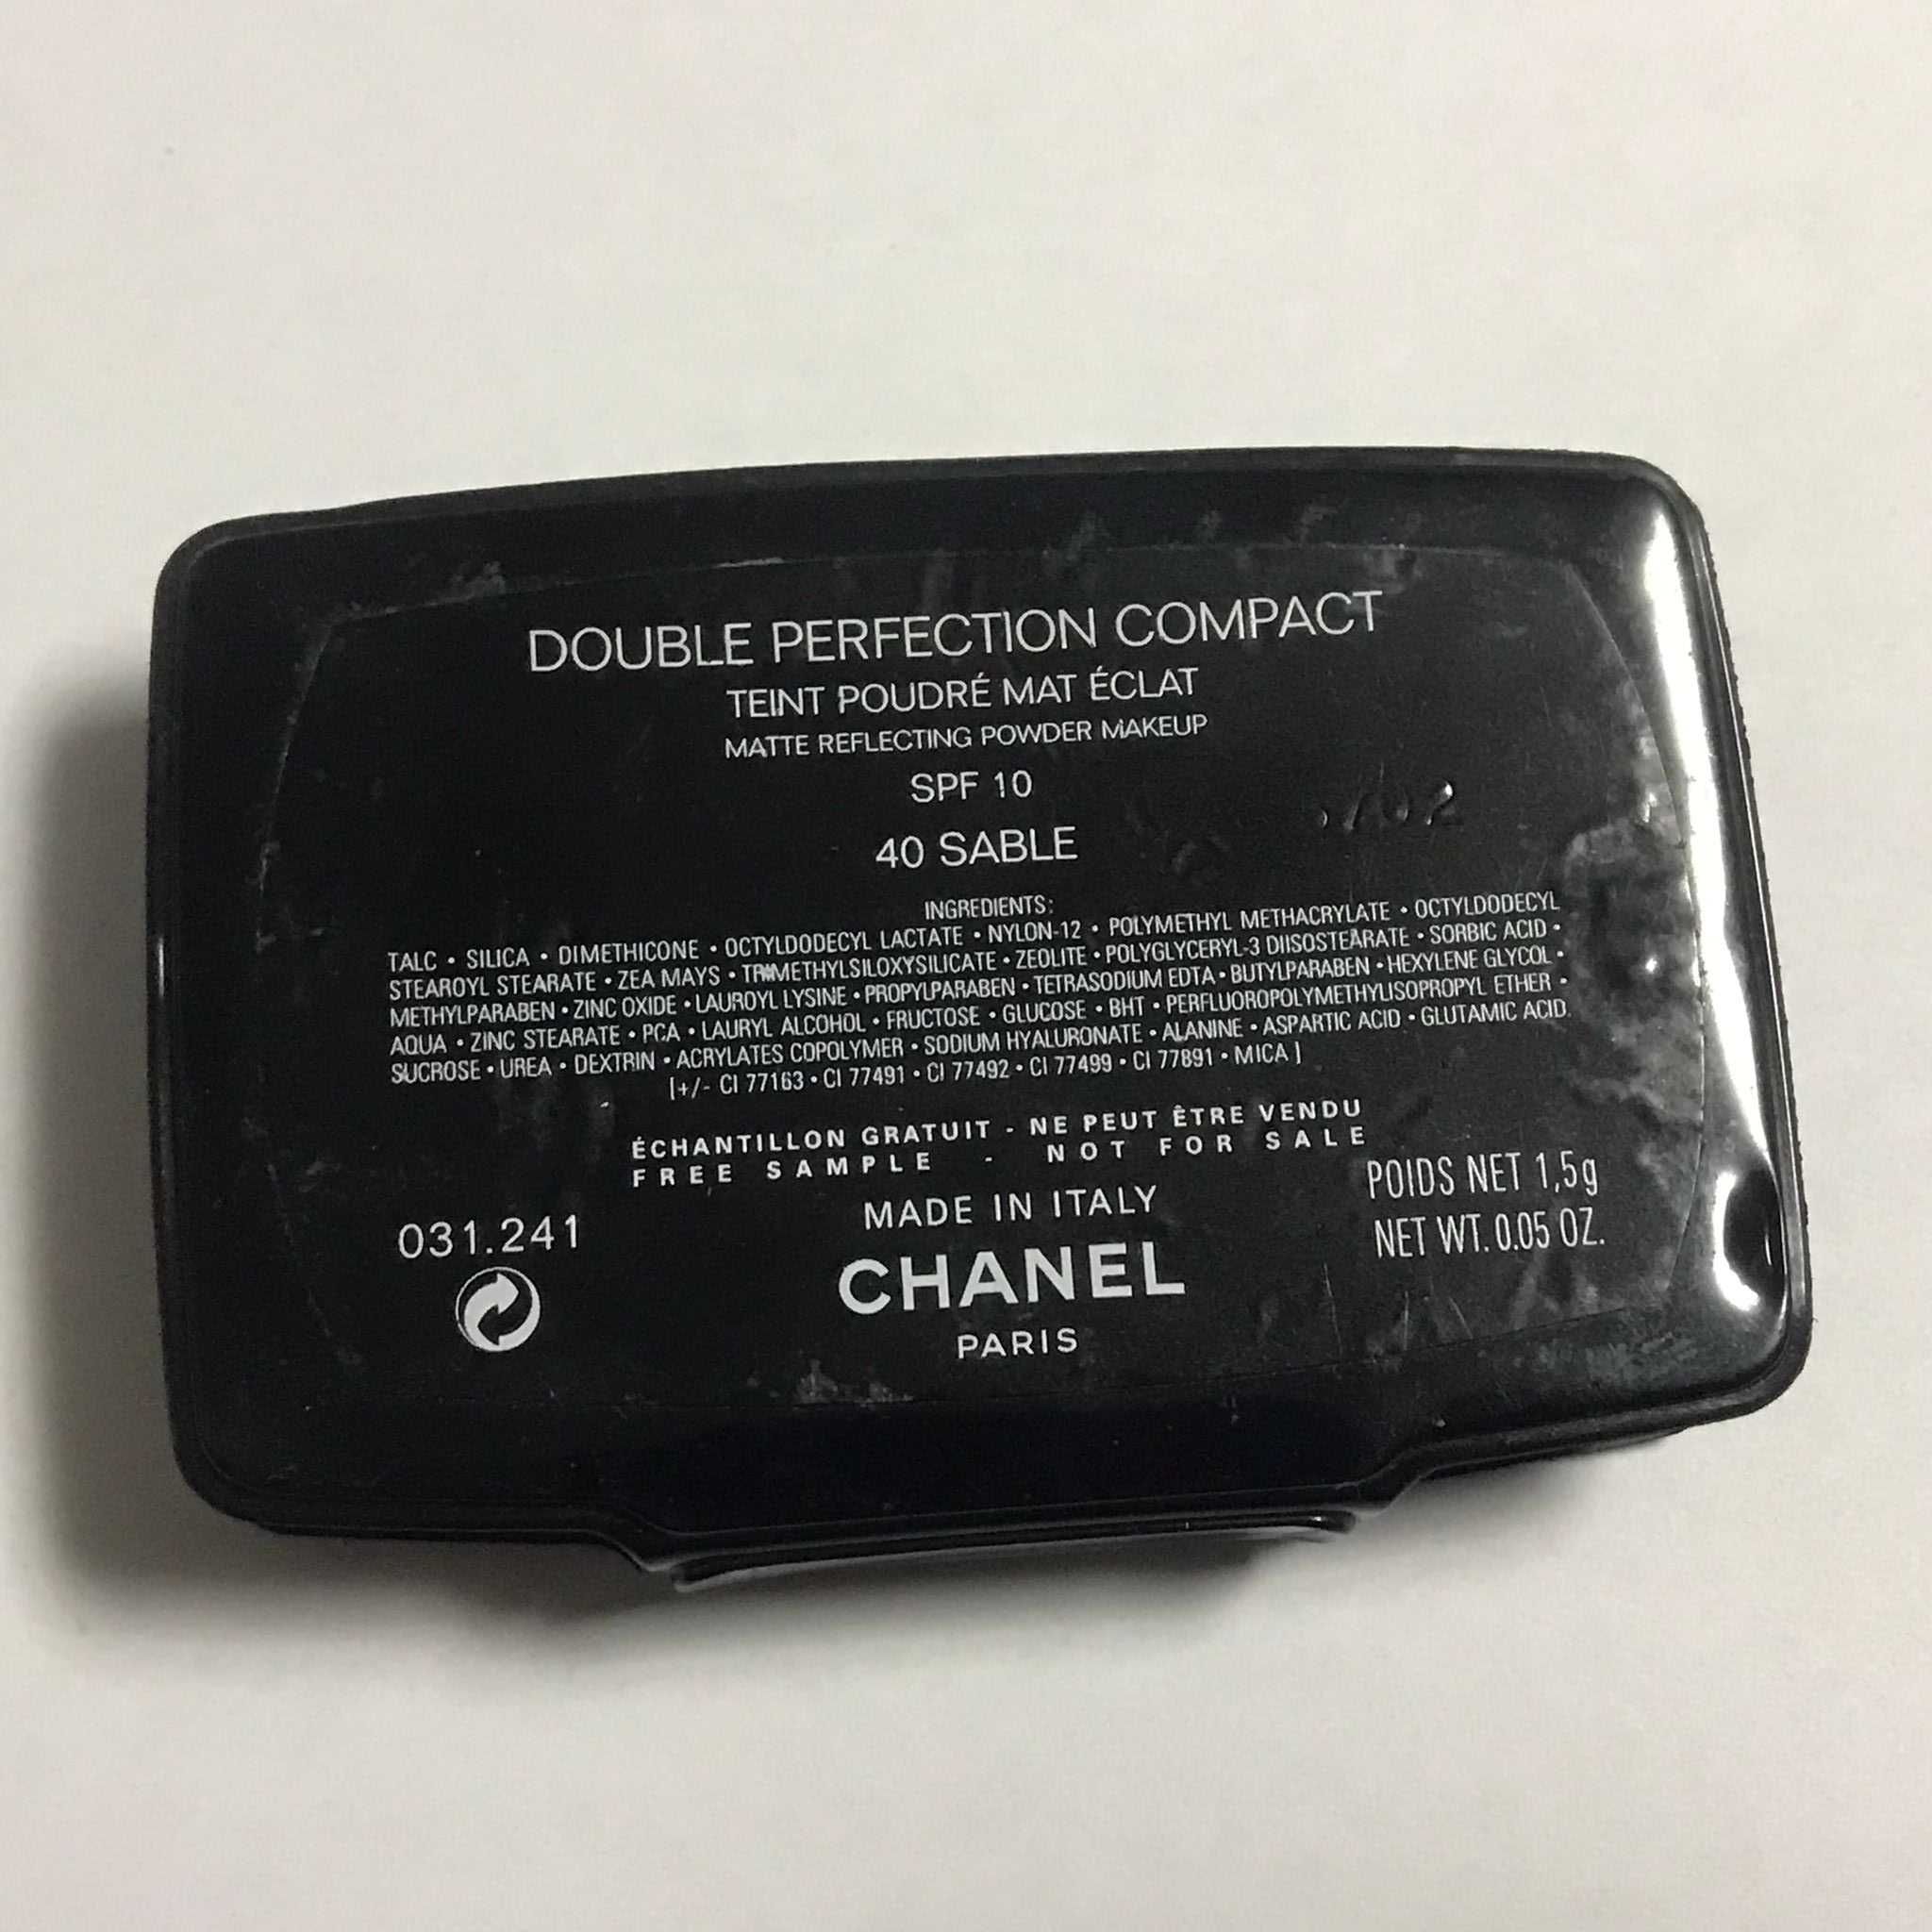 Pudra fond de ten Chanel Double perfection compact